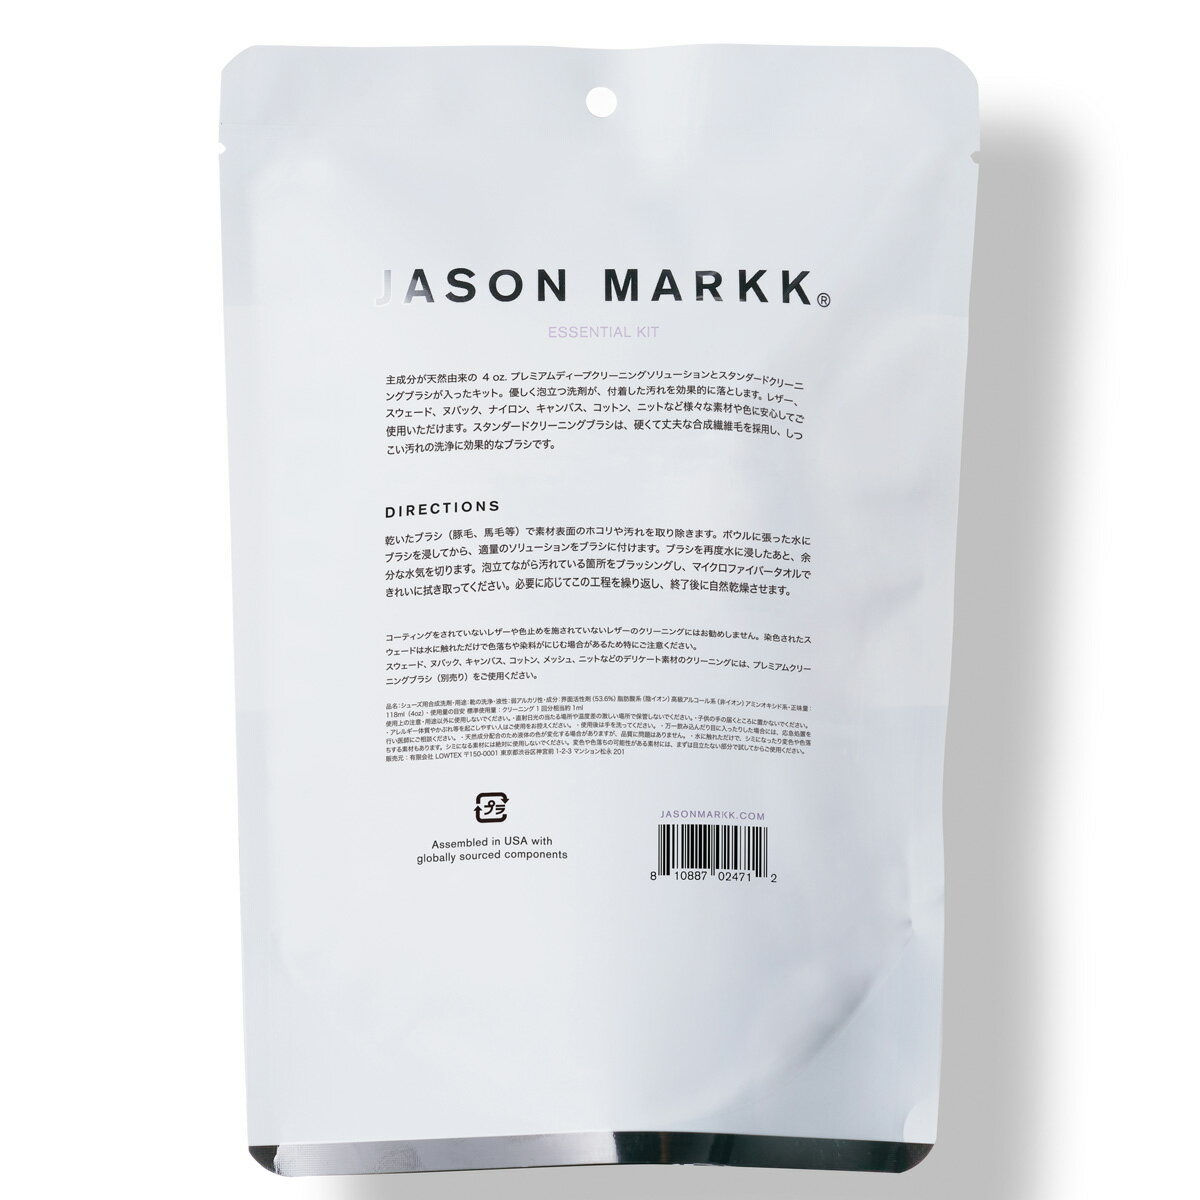 JASON MARKK ”NEW